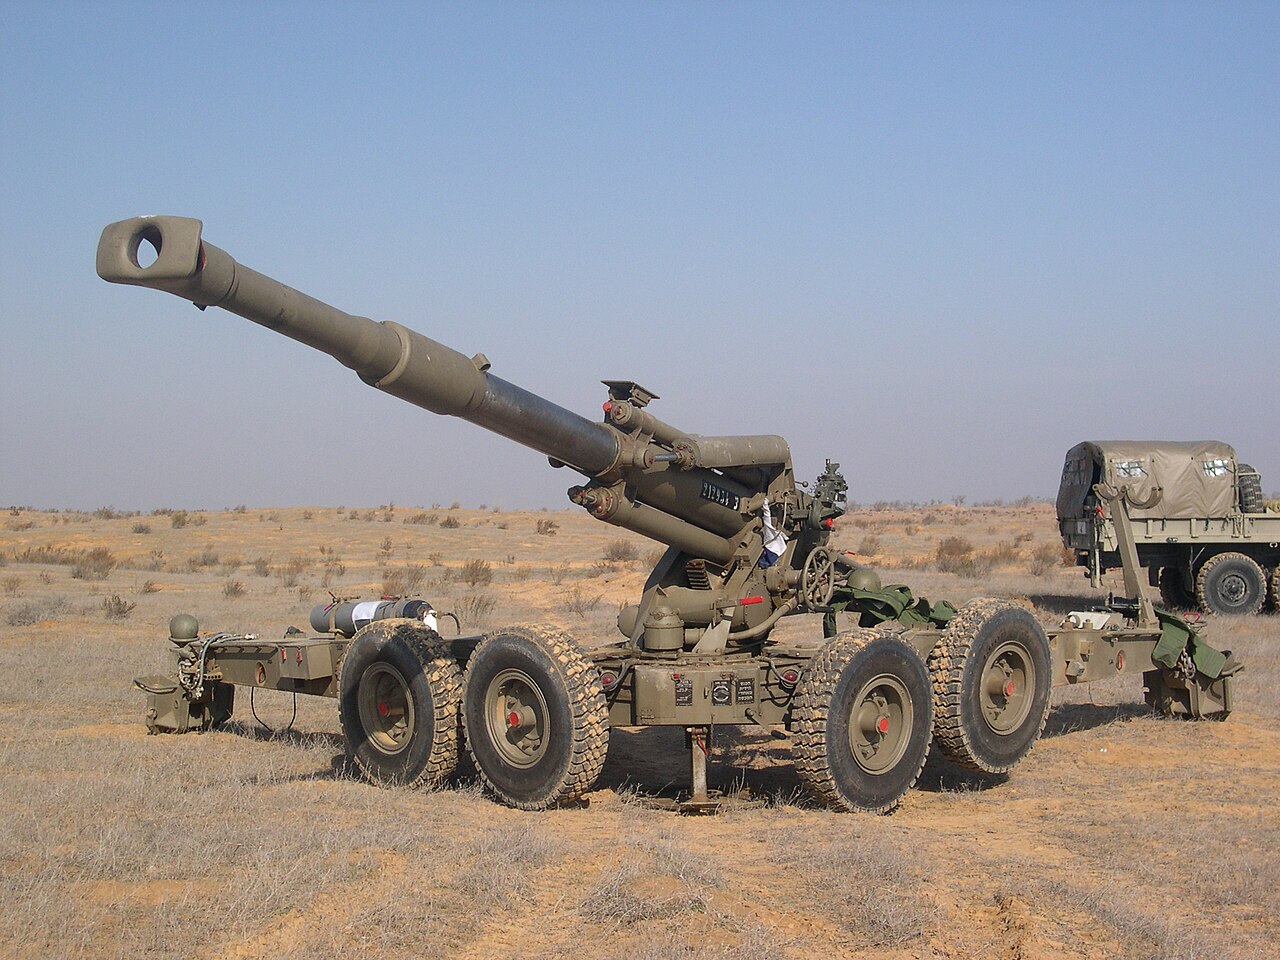 1280px-M-71-cannon-deployed.JPG